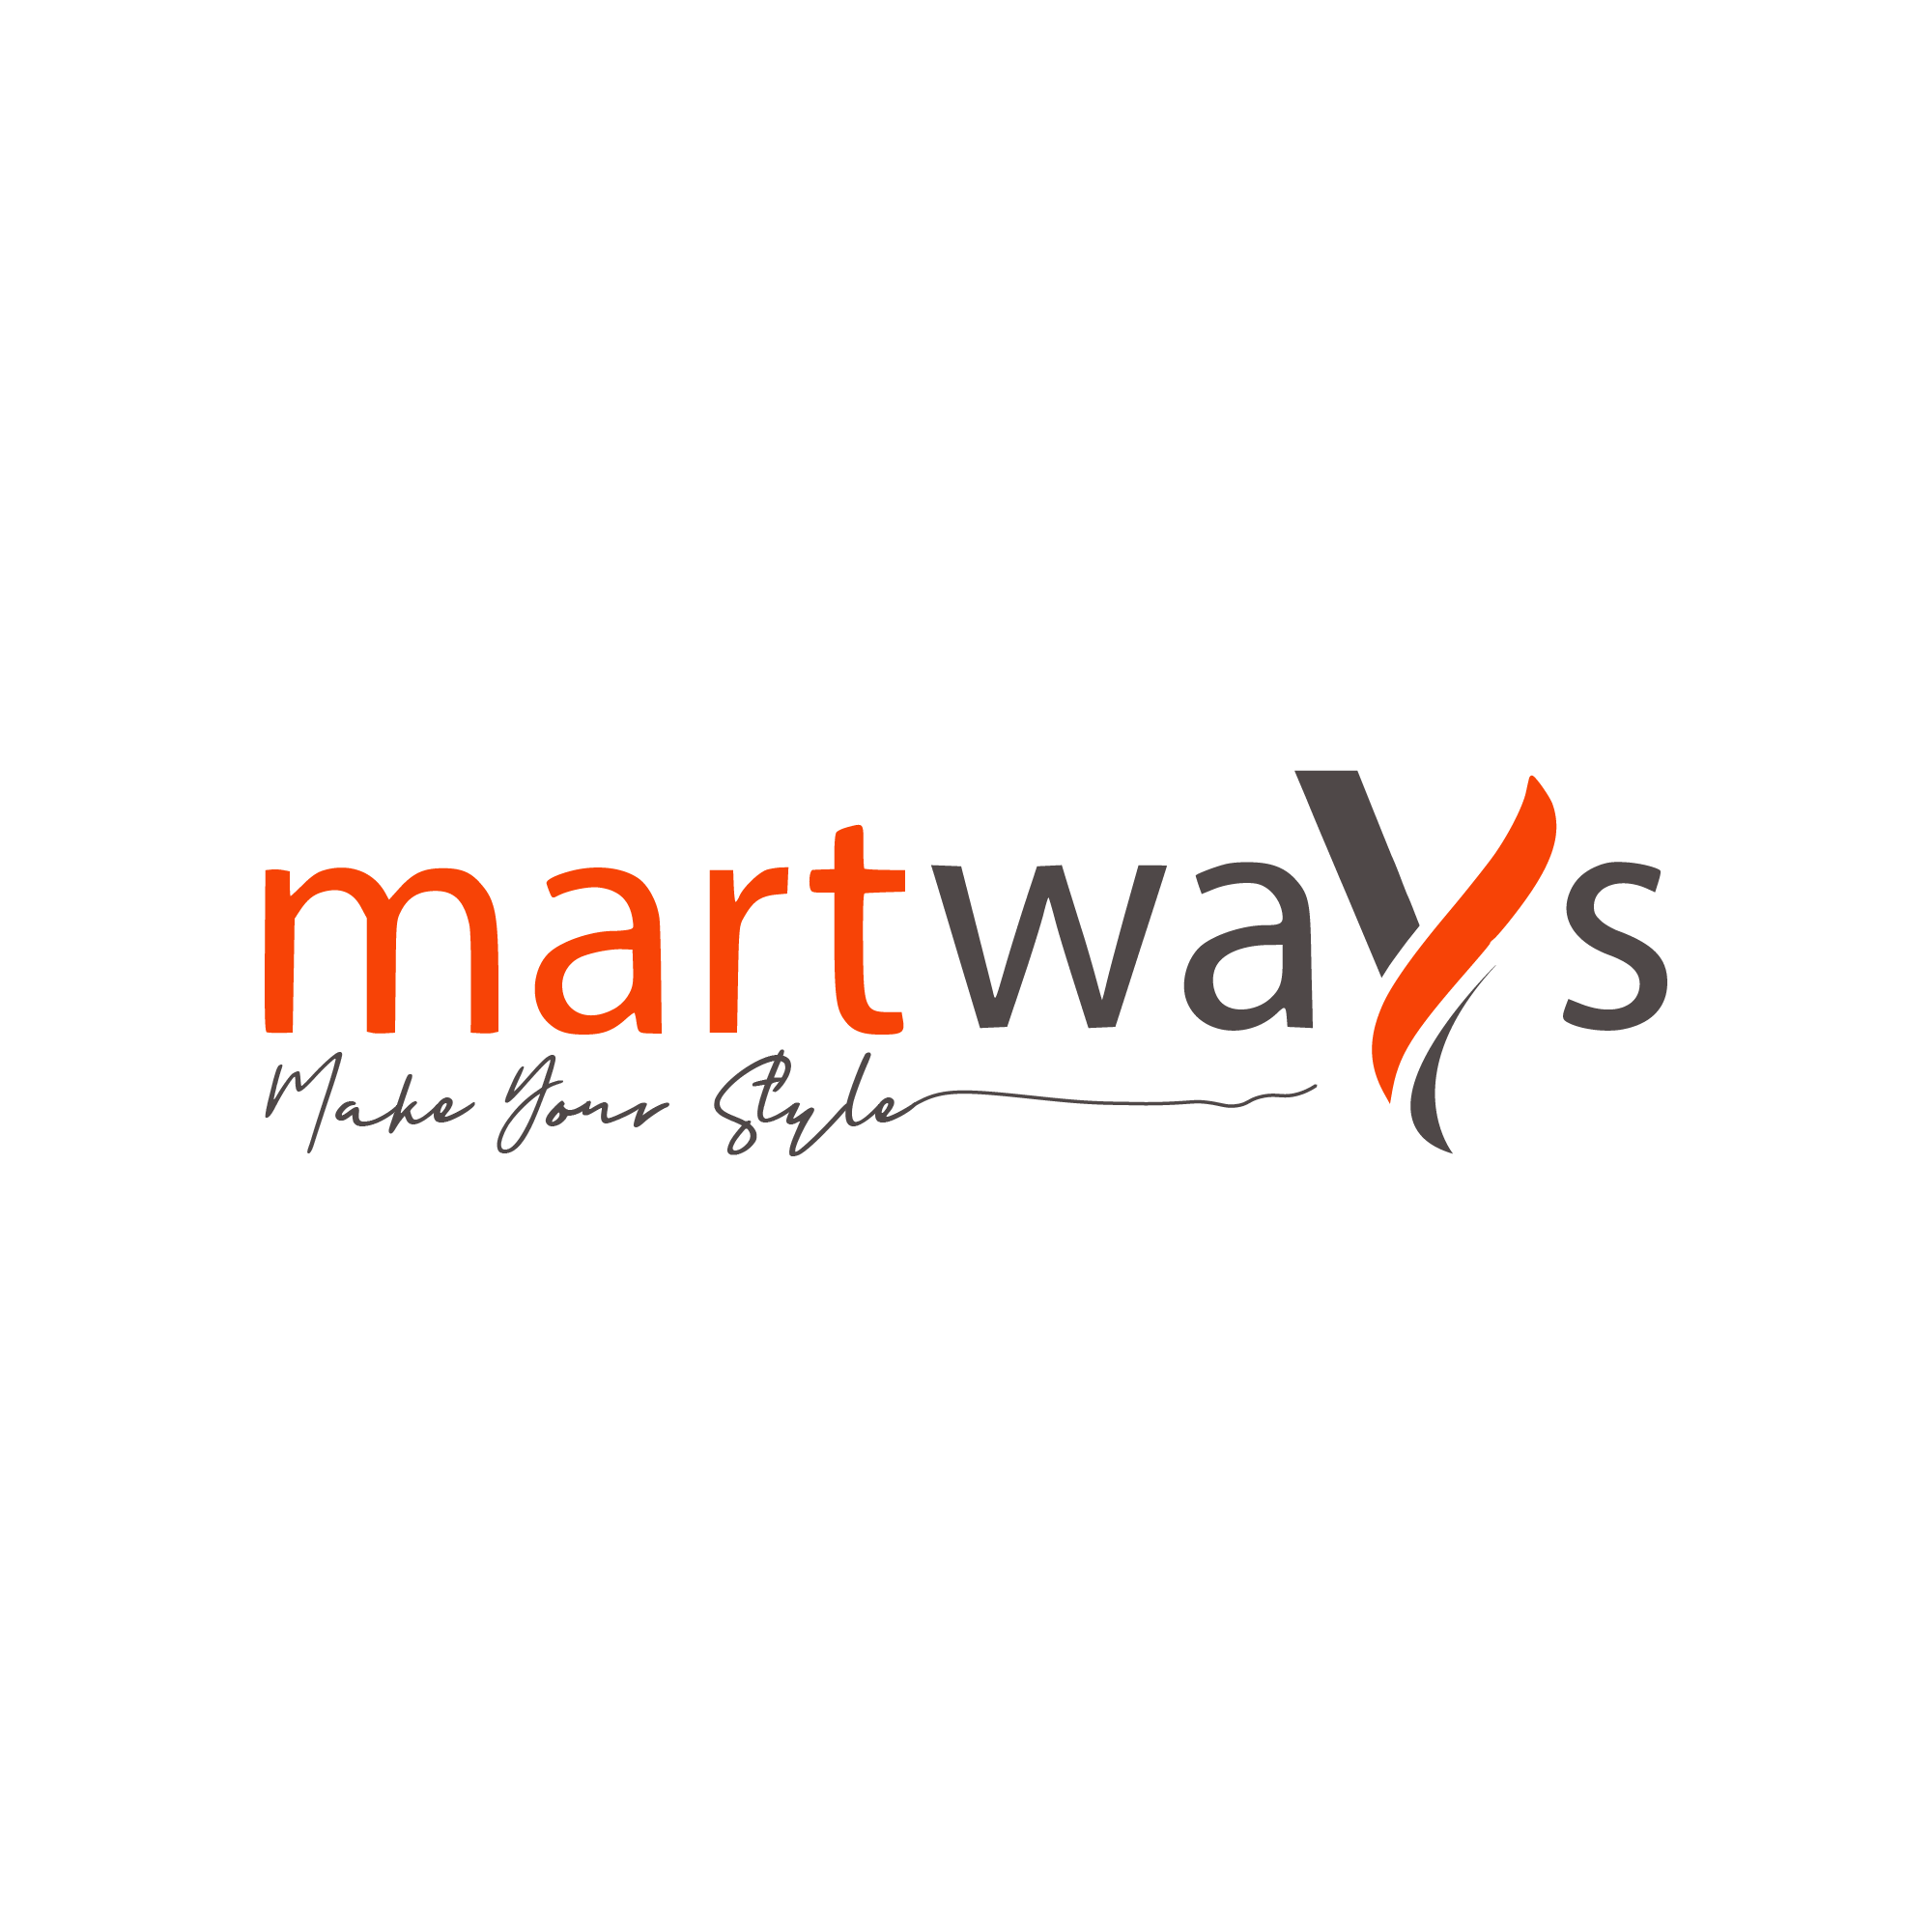 Martways